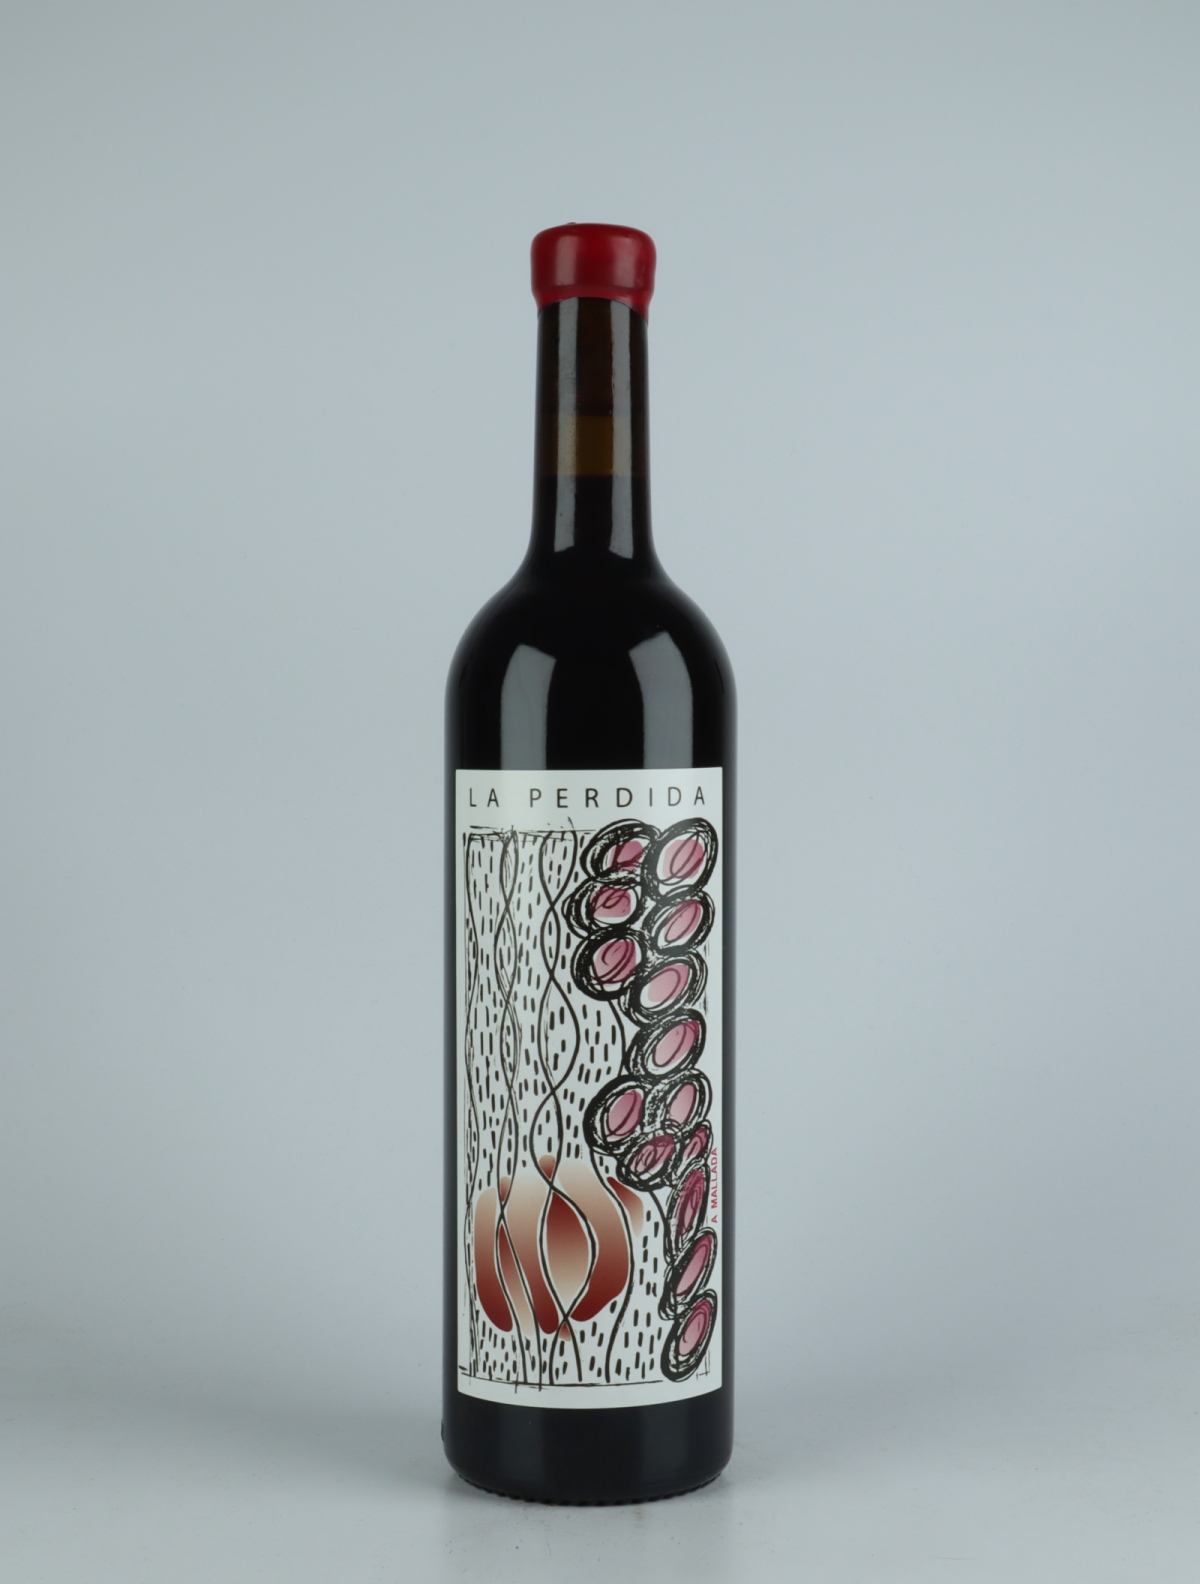 A bottle 2021 A Mallada Red wine from La Perdida, Ribeira Sacra in Spain